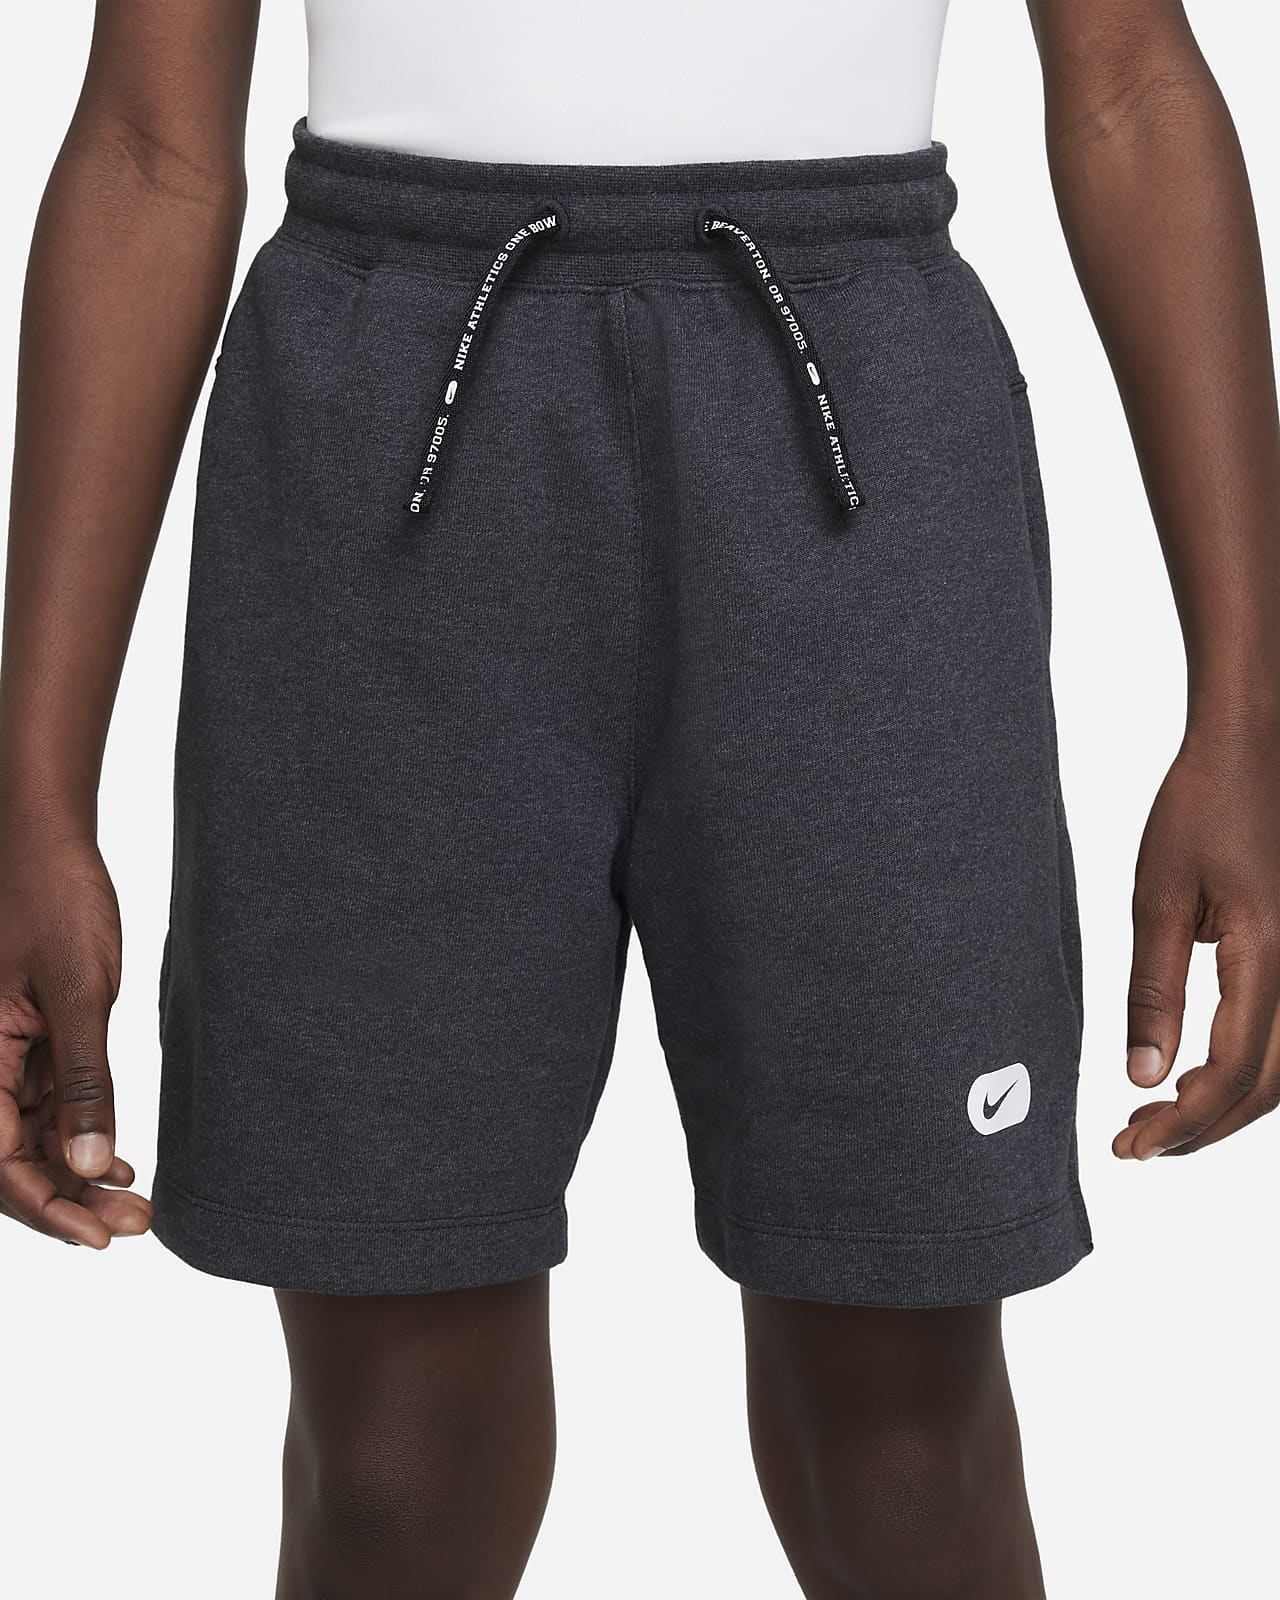 Nike Fleece Shorts  Champs Sports Canada